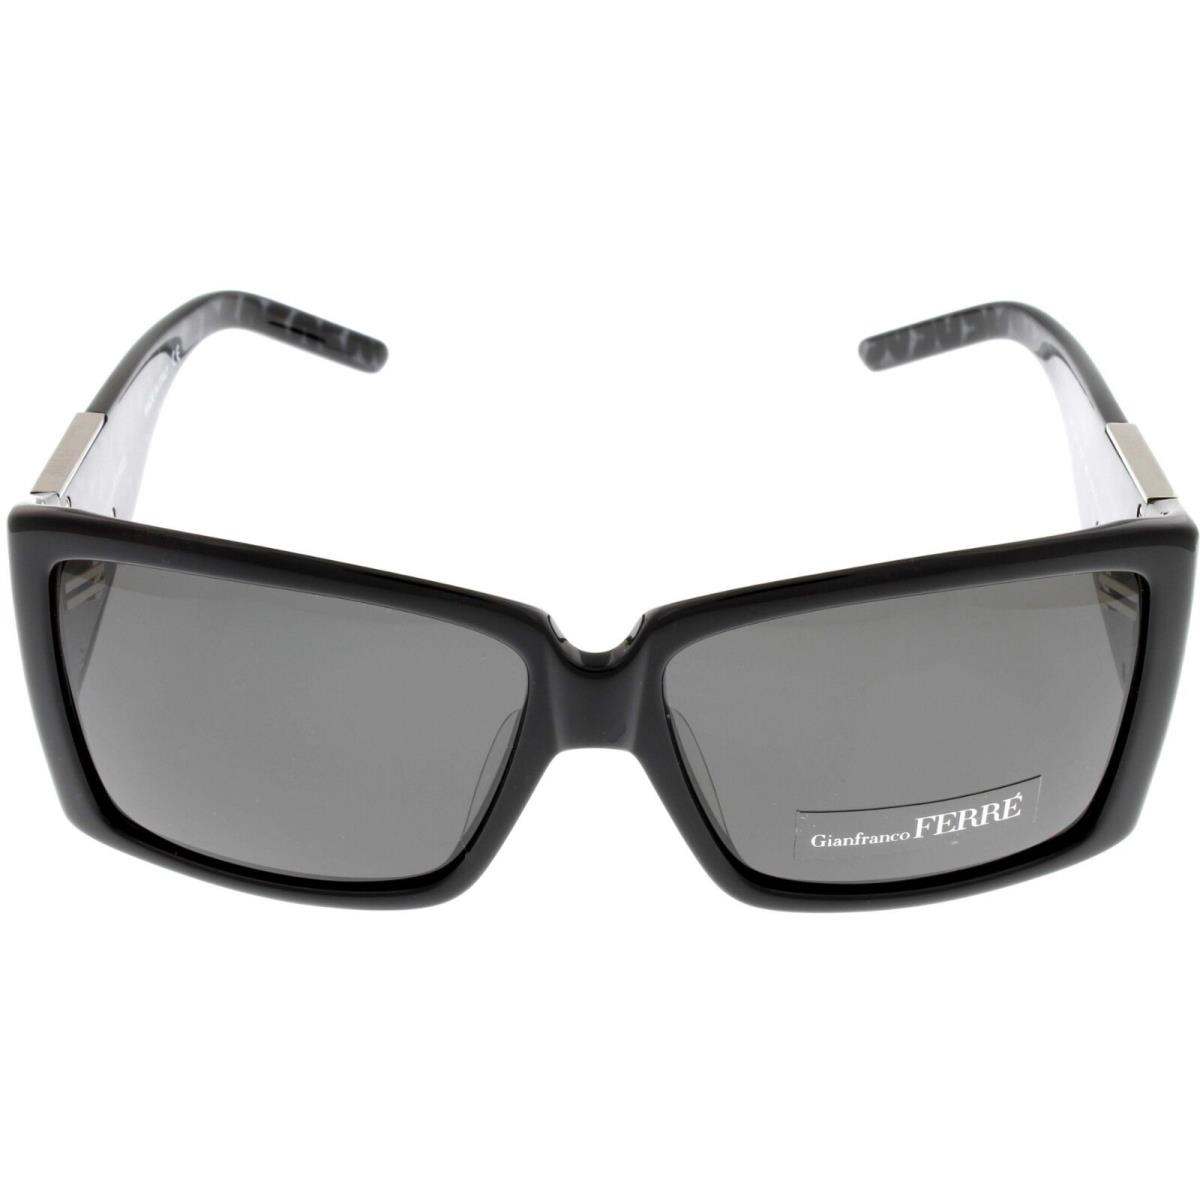 Gianfranco Ferre Sunglasses Women Black Palladium Rectangular GF957 01